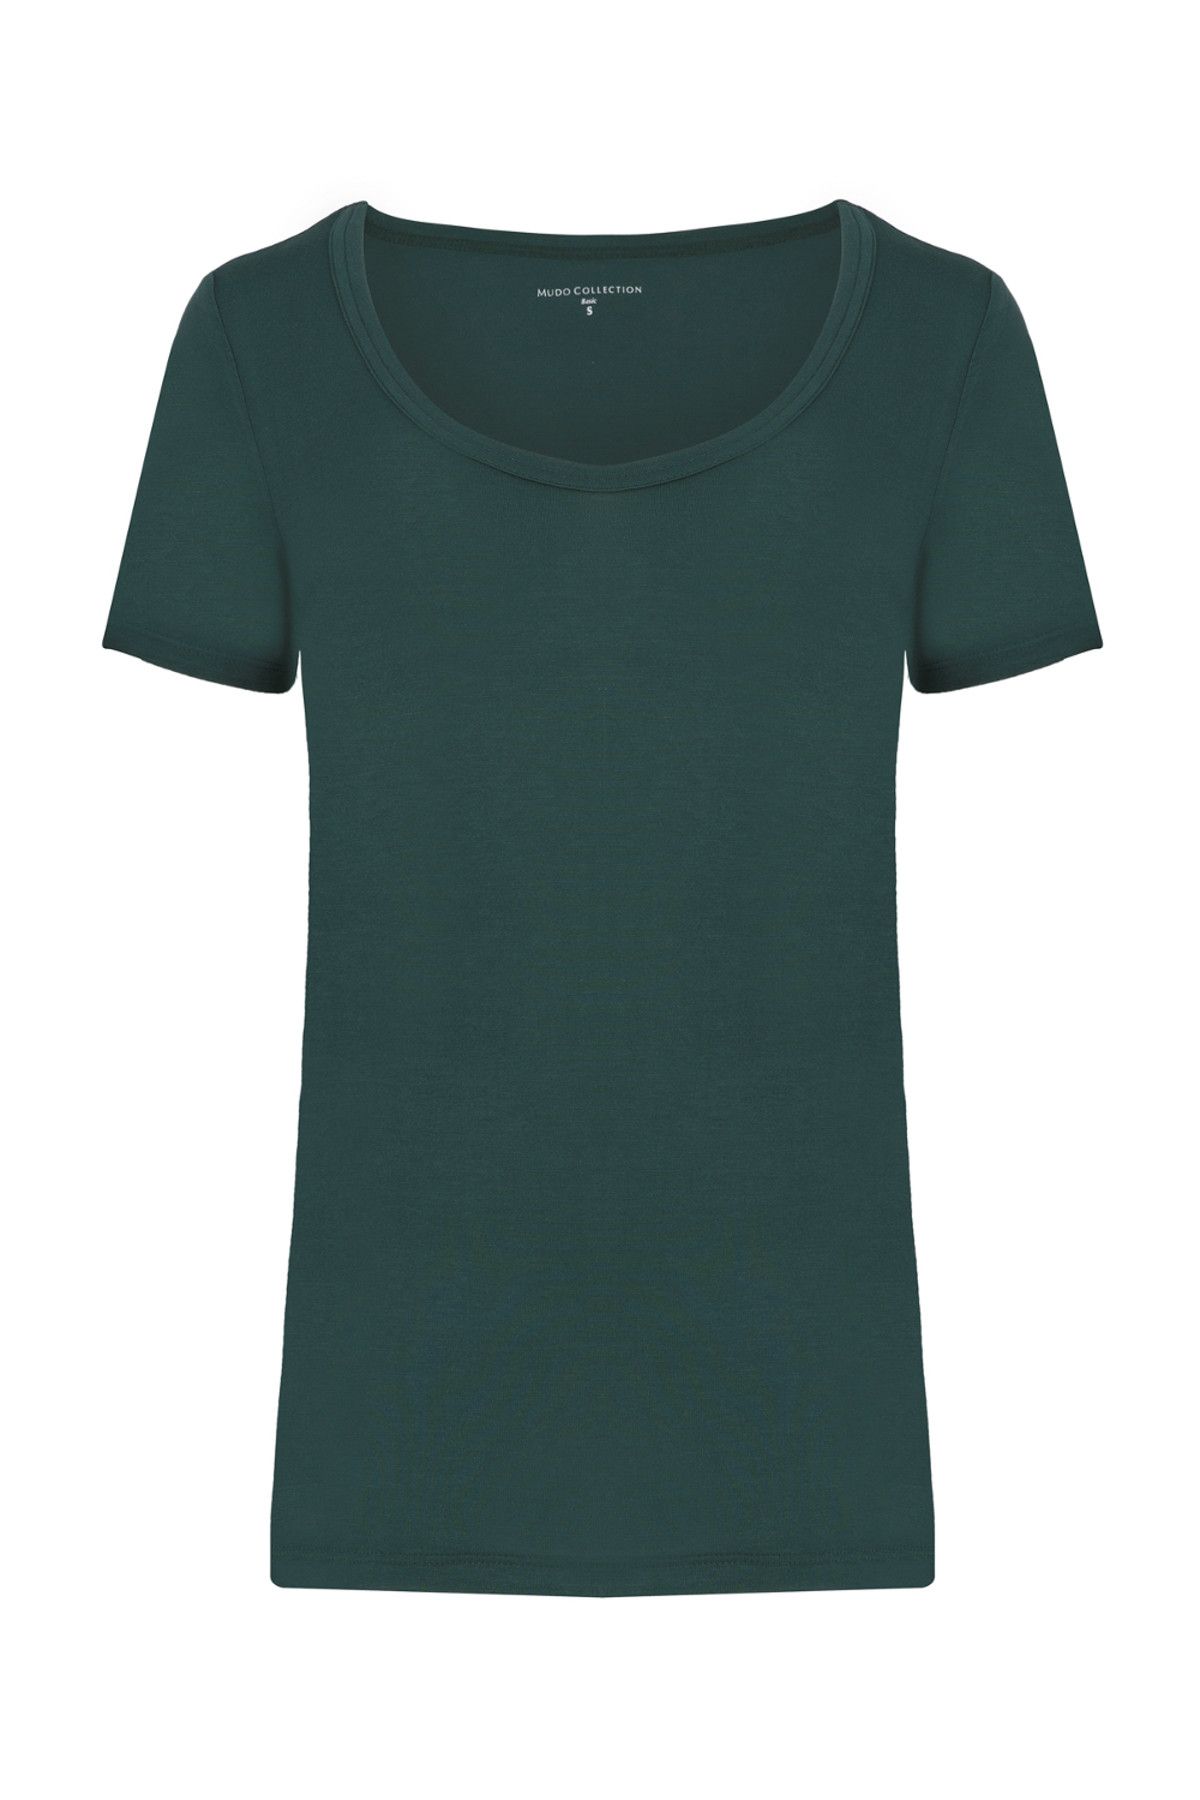 Mudo Kadın Koyu Yeşil T-Shirt 1186924